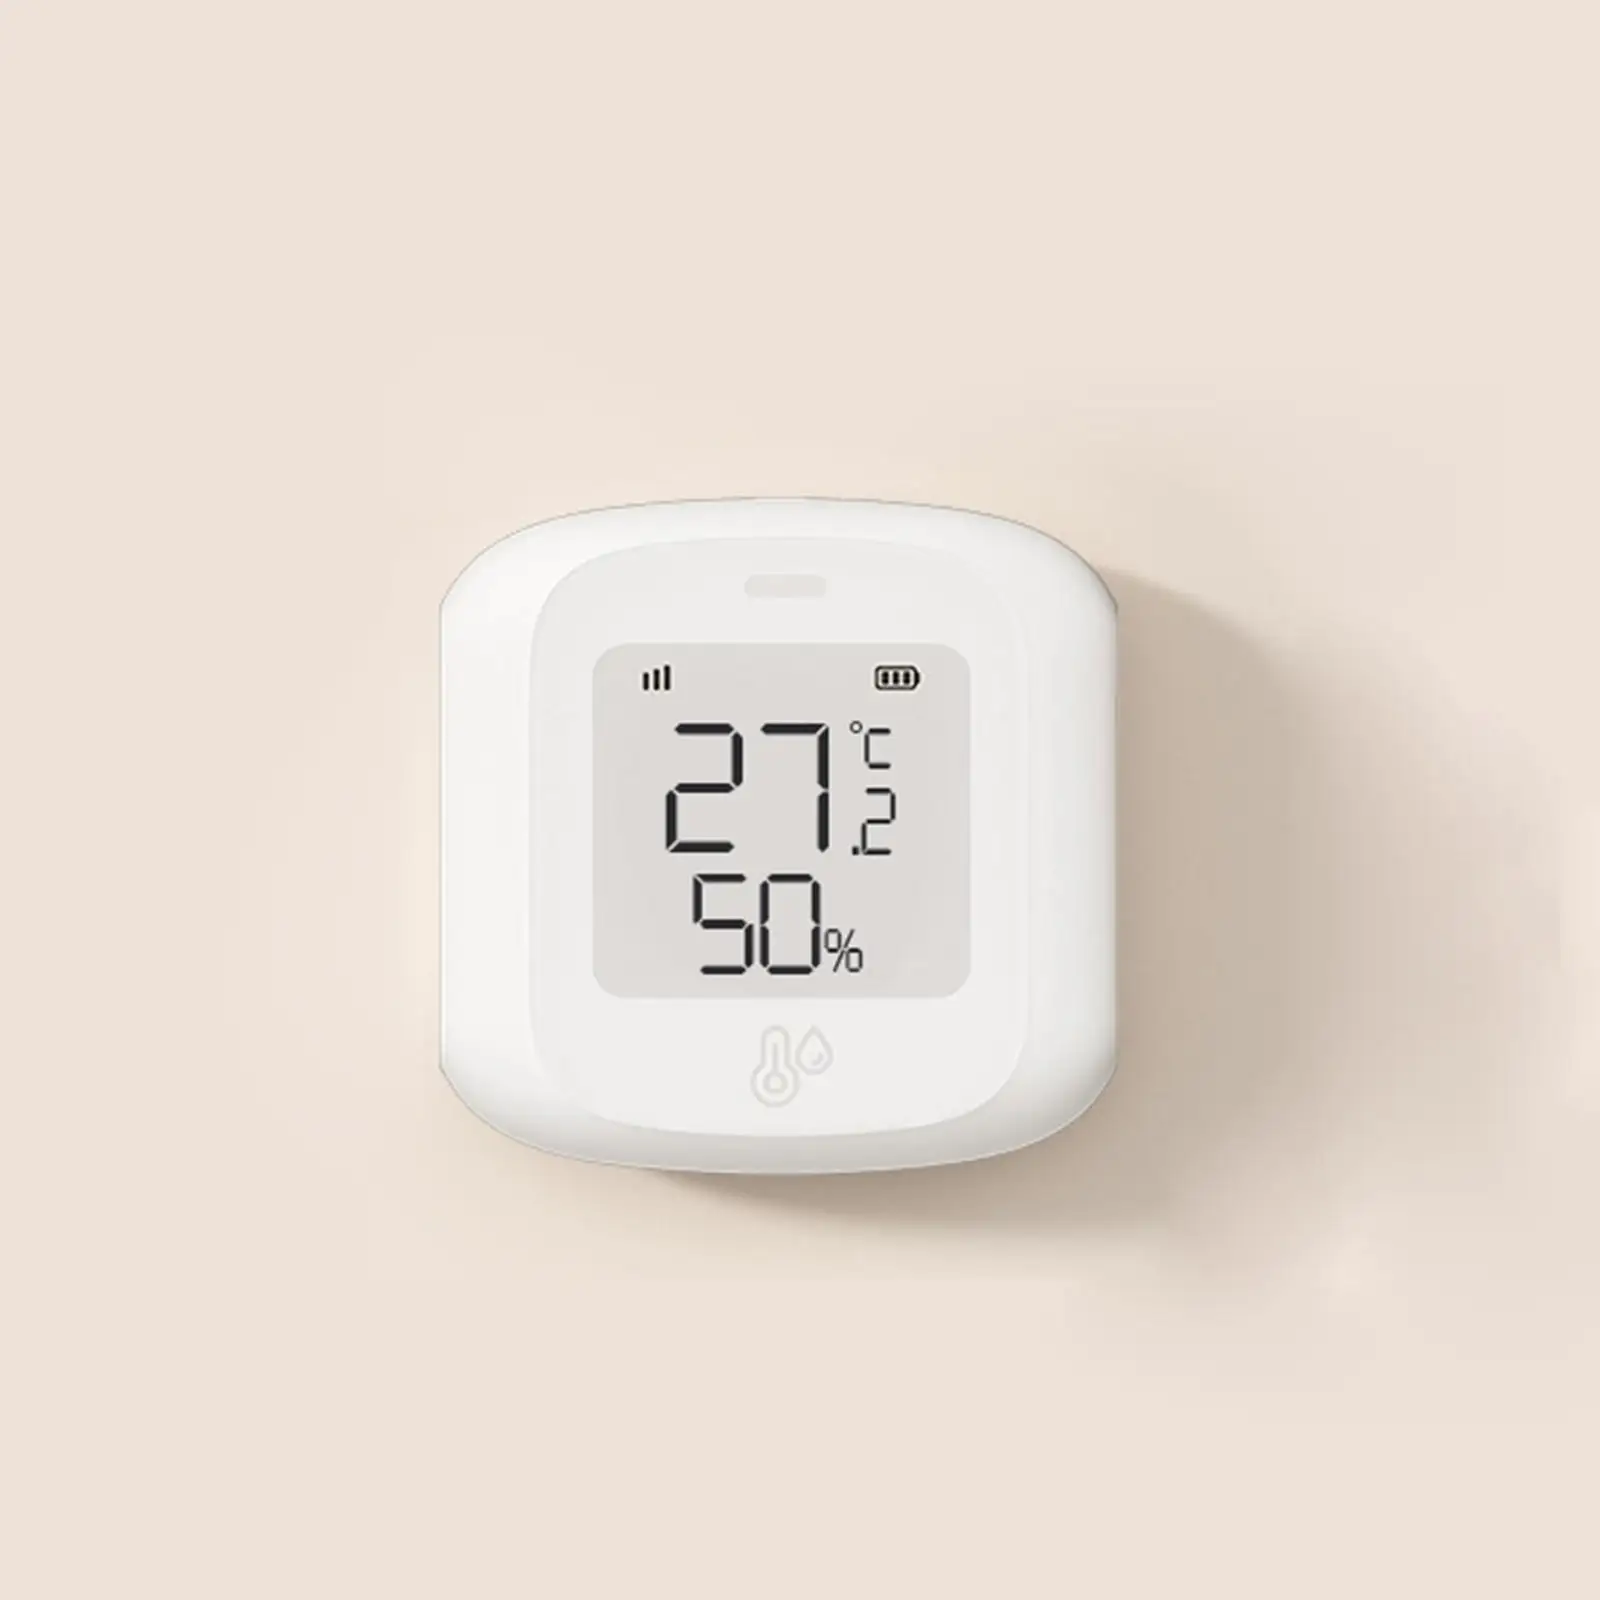 LCD Display Emperature and Humidity Sensor Outdoor Indoor Household Thermometer for Garden Pools Refrigerator Door Spas Office